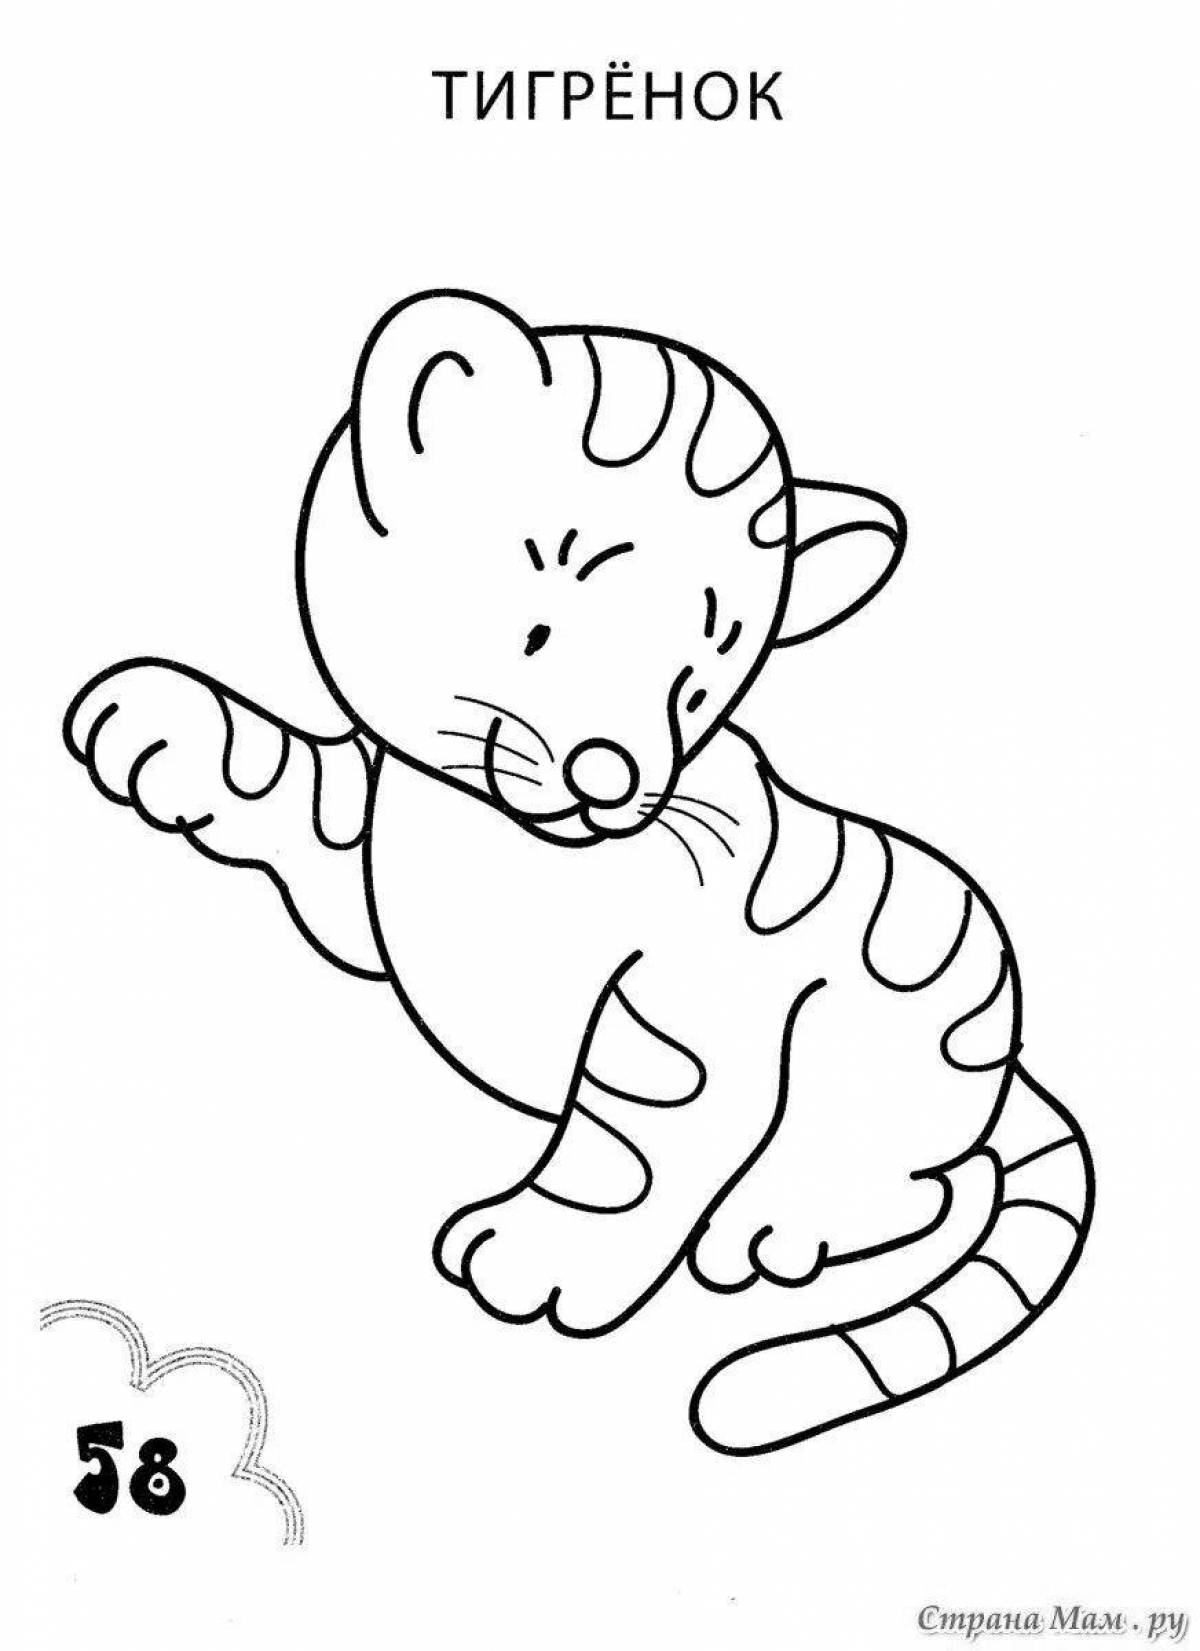 Tiger cub small #6